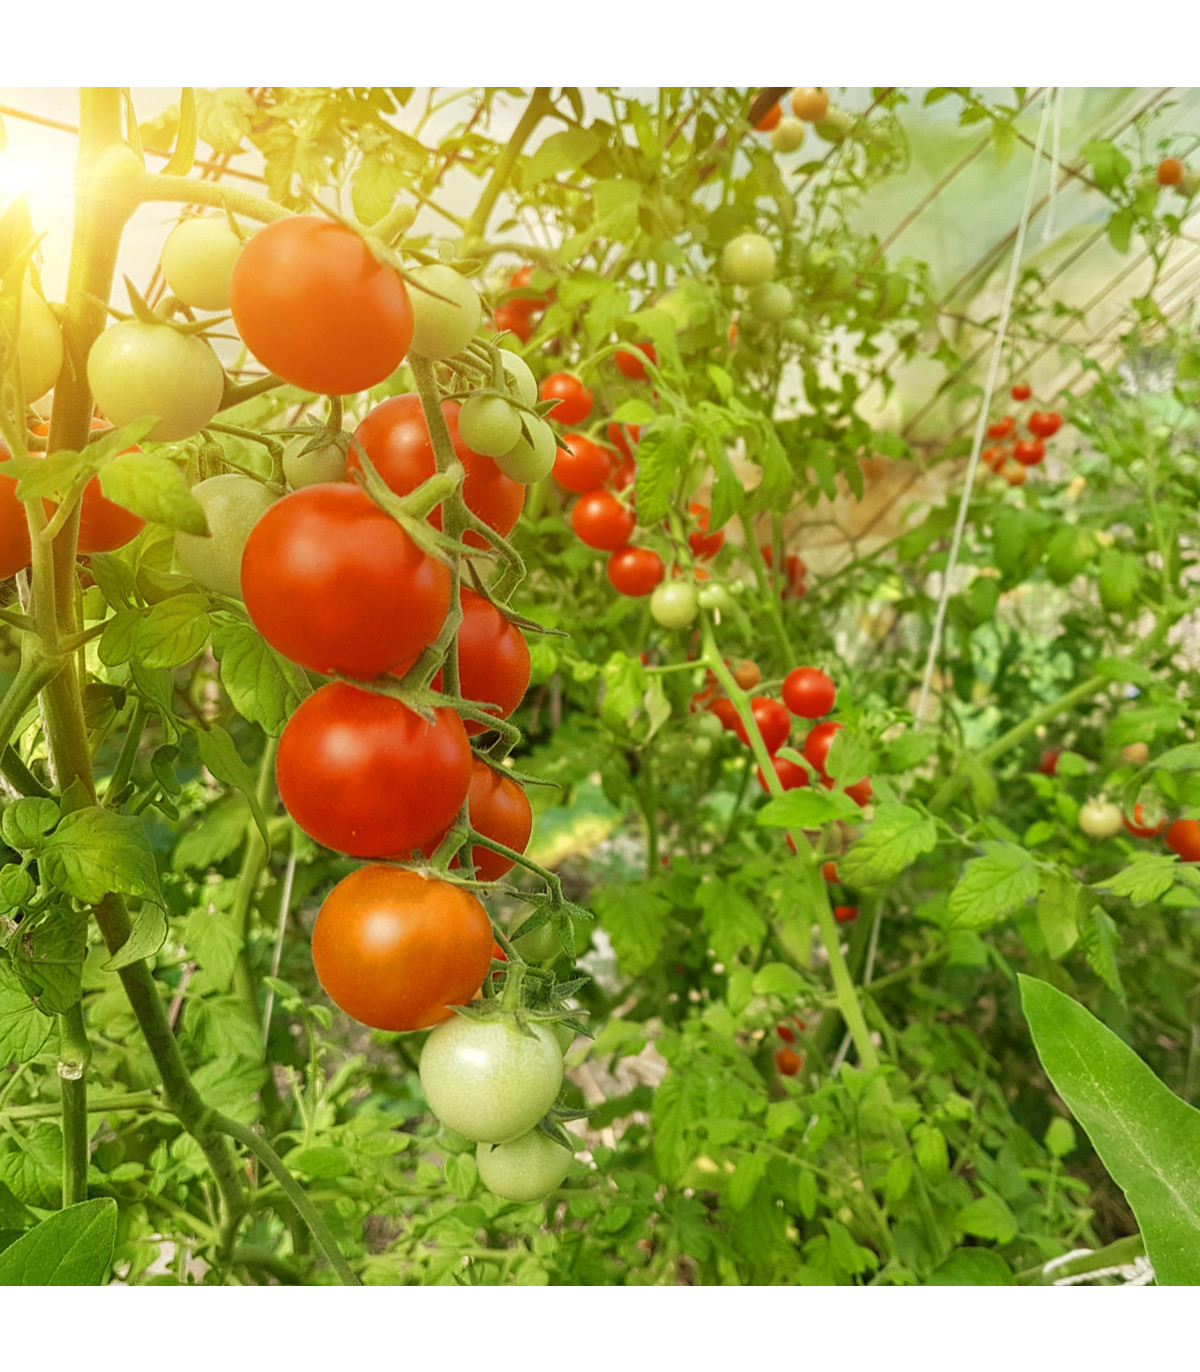 BIO Rajče Hamlet F1 - Solanum lycopersicum - bio osivo rajčat - 5 ks